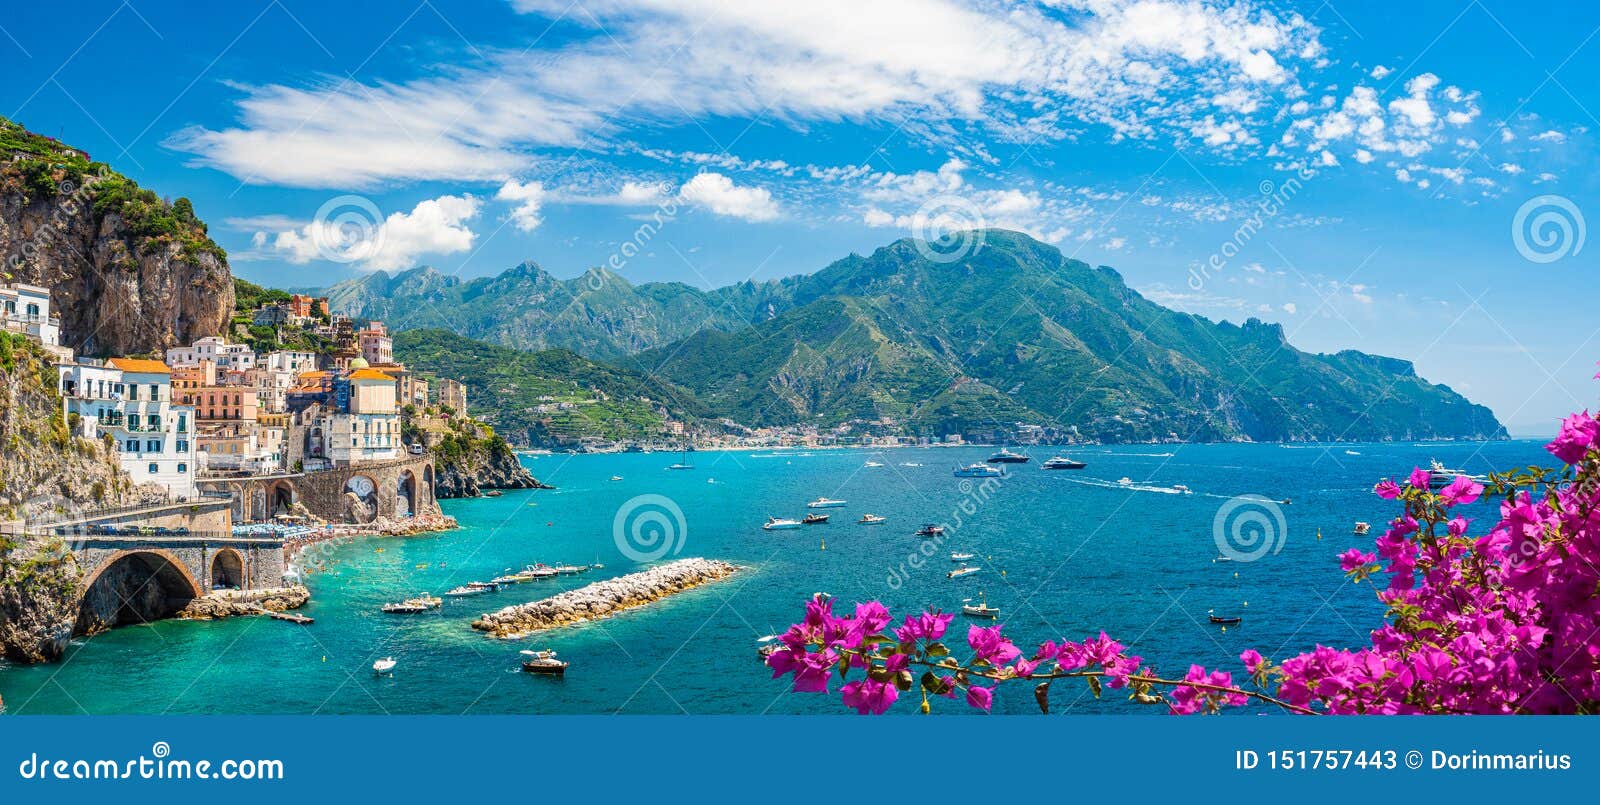 landscape with amalfi coast